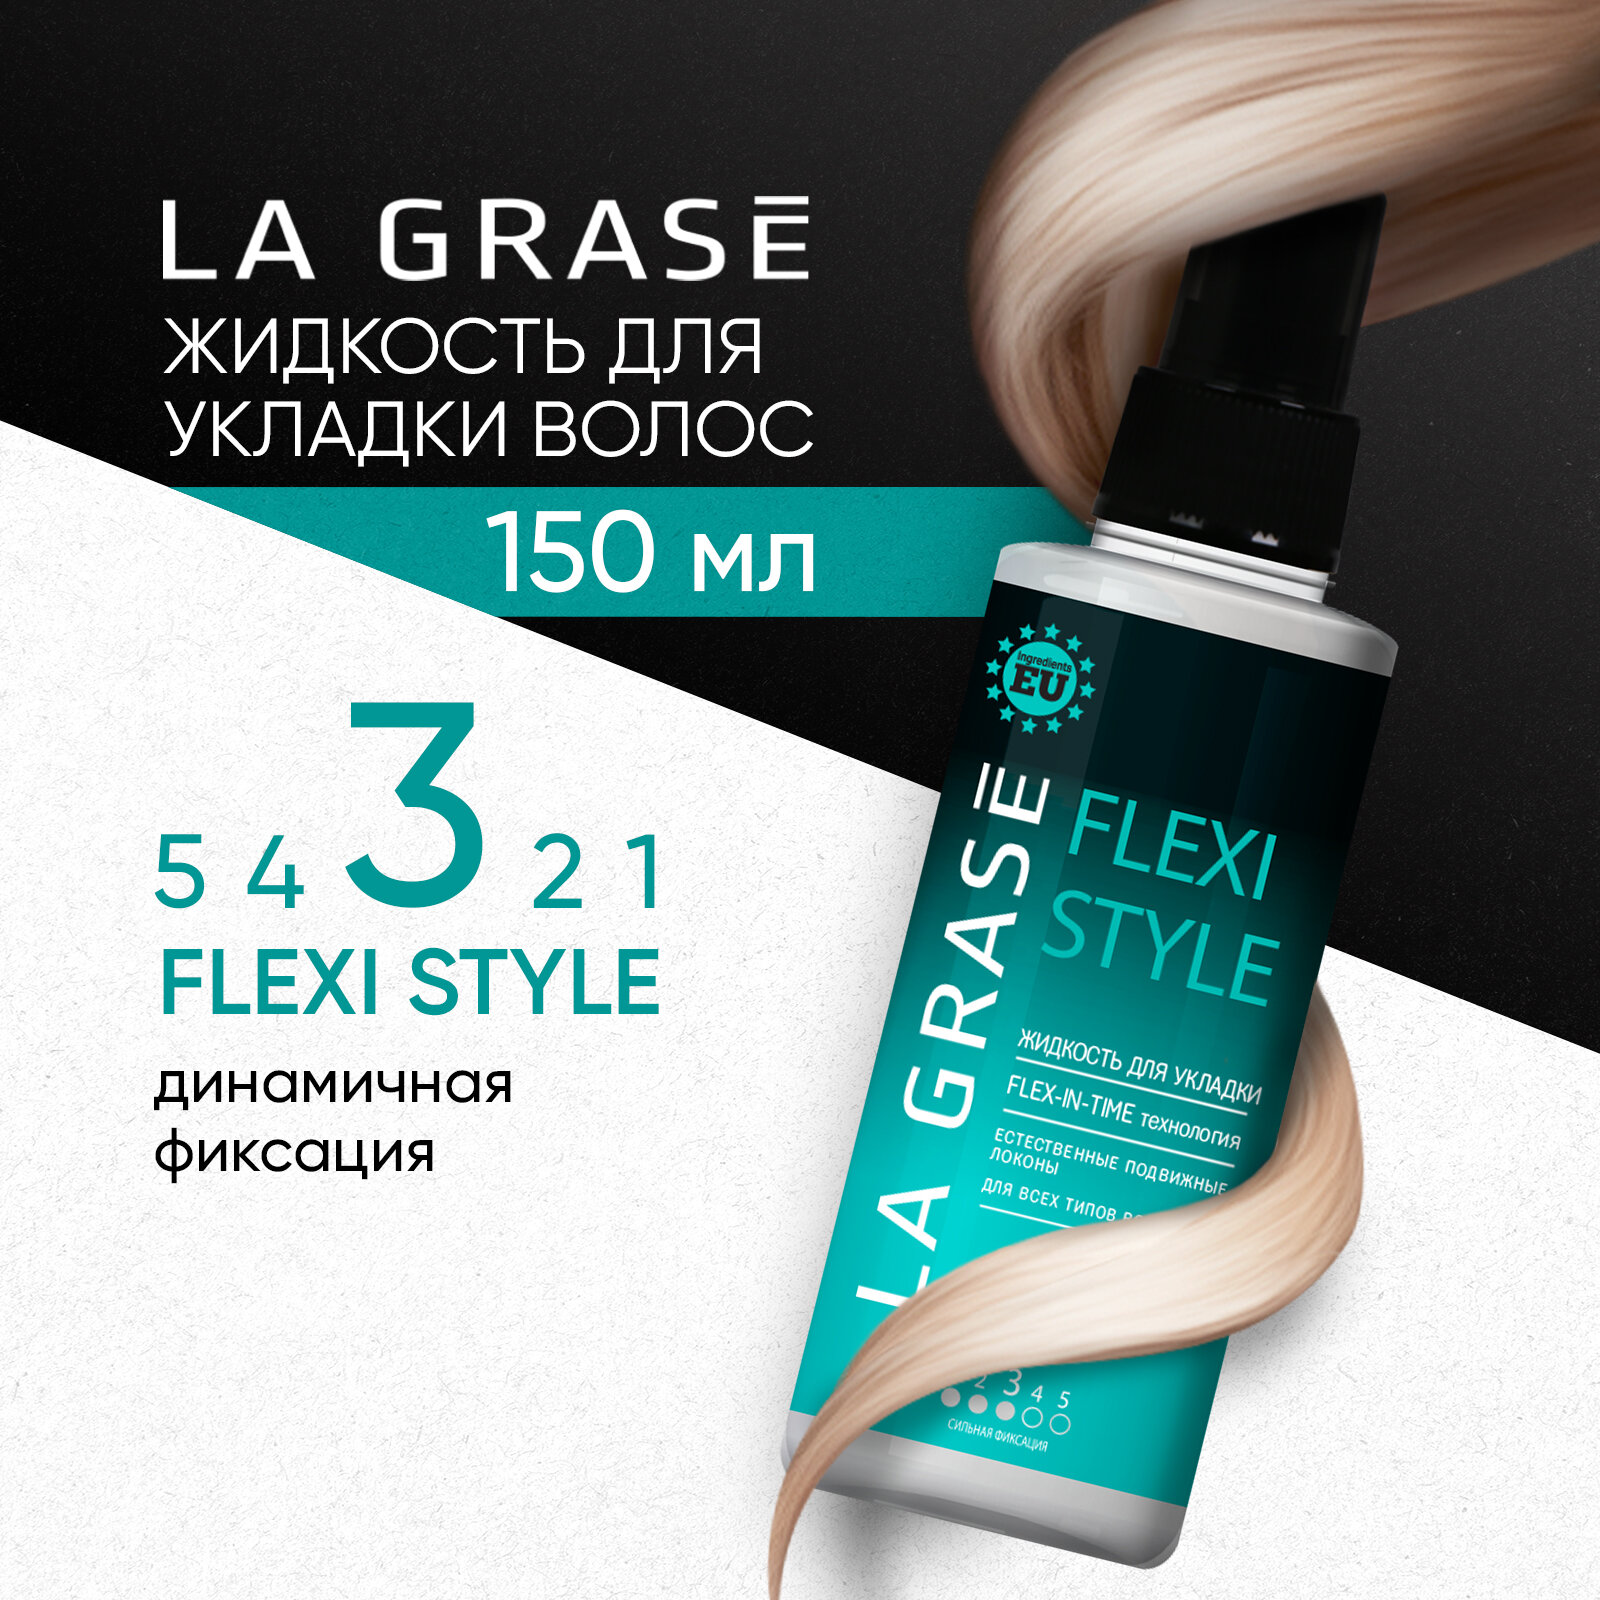 Спрей для укладки волос La Grase Flexi Style, стайлинг для объема средней фиксации, 150 мл